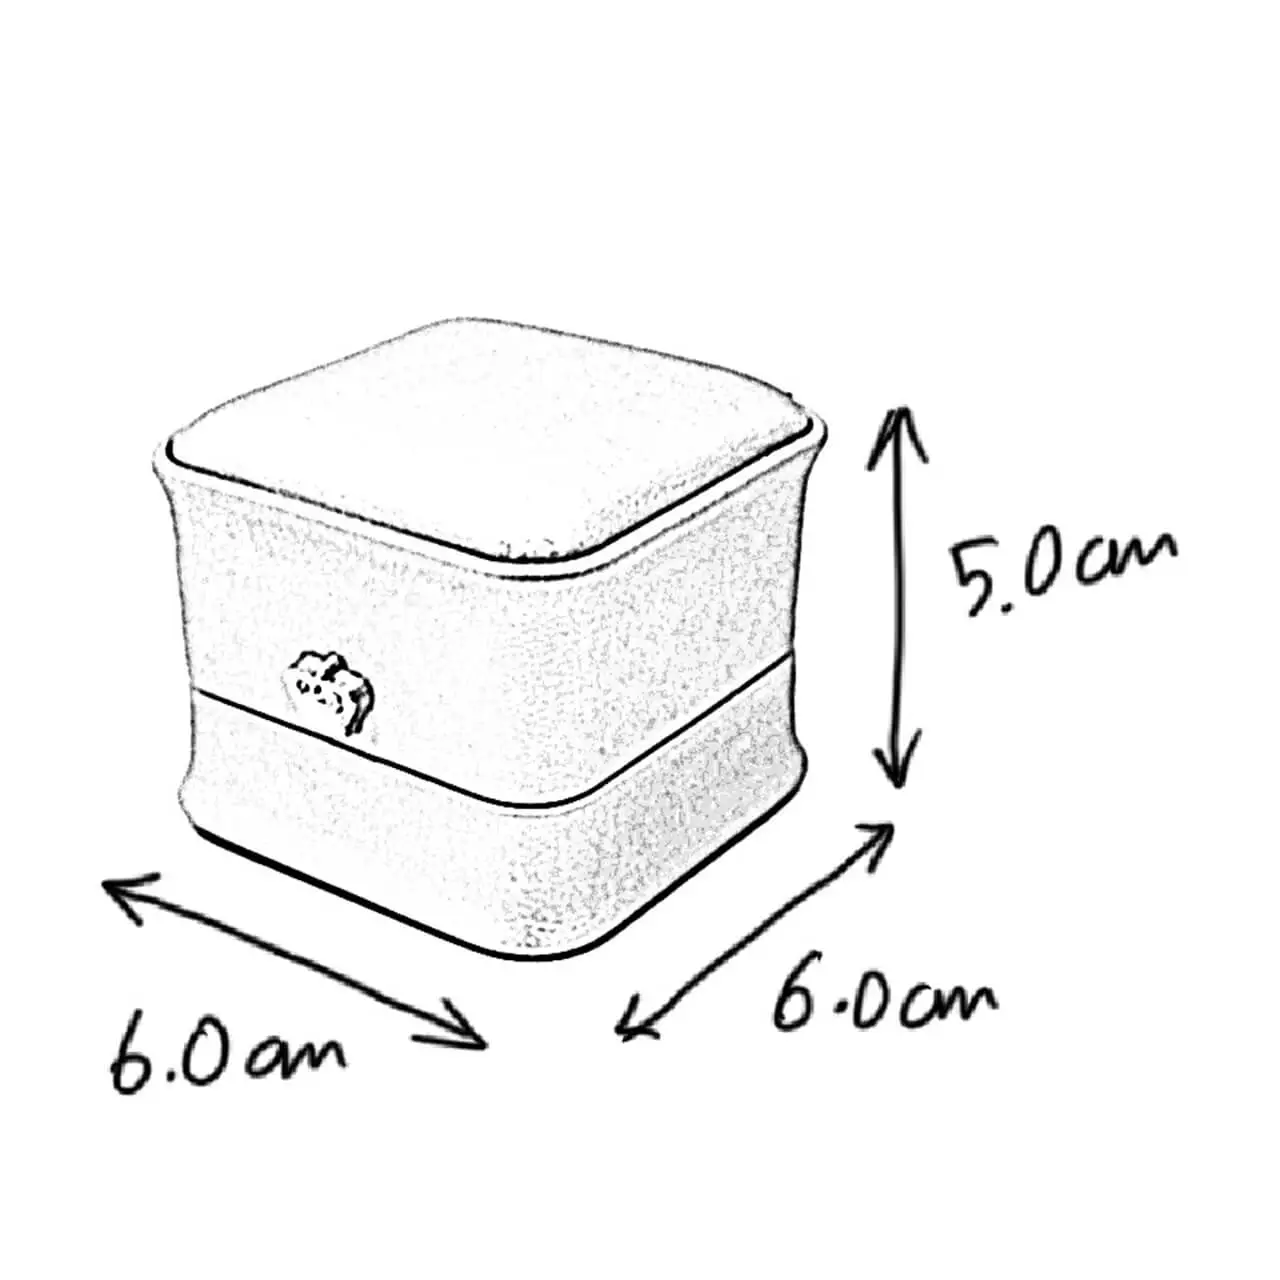 posie ring box dimensions